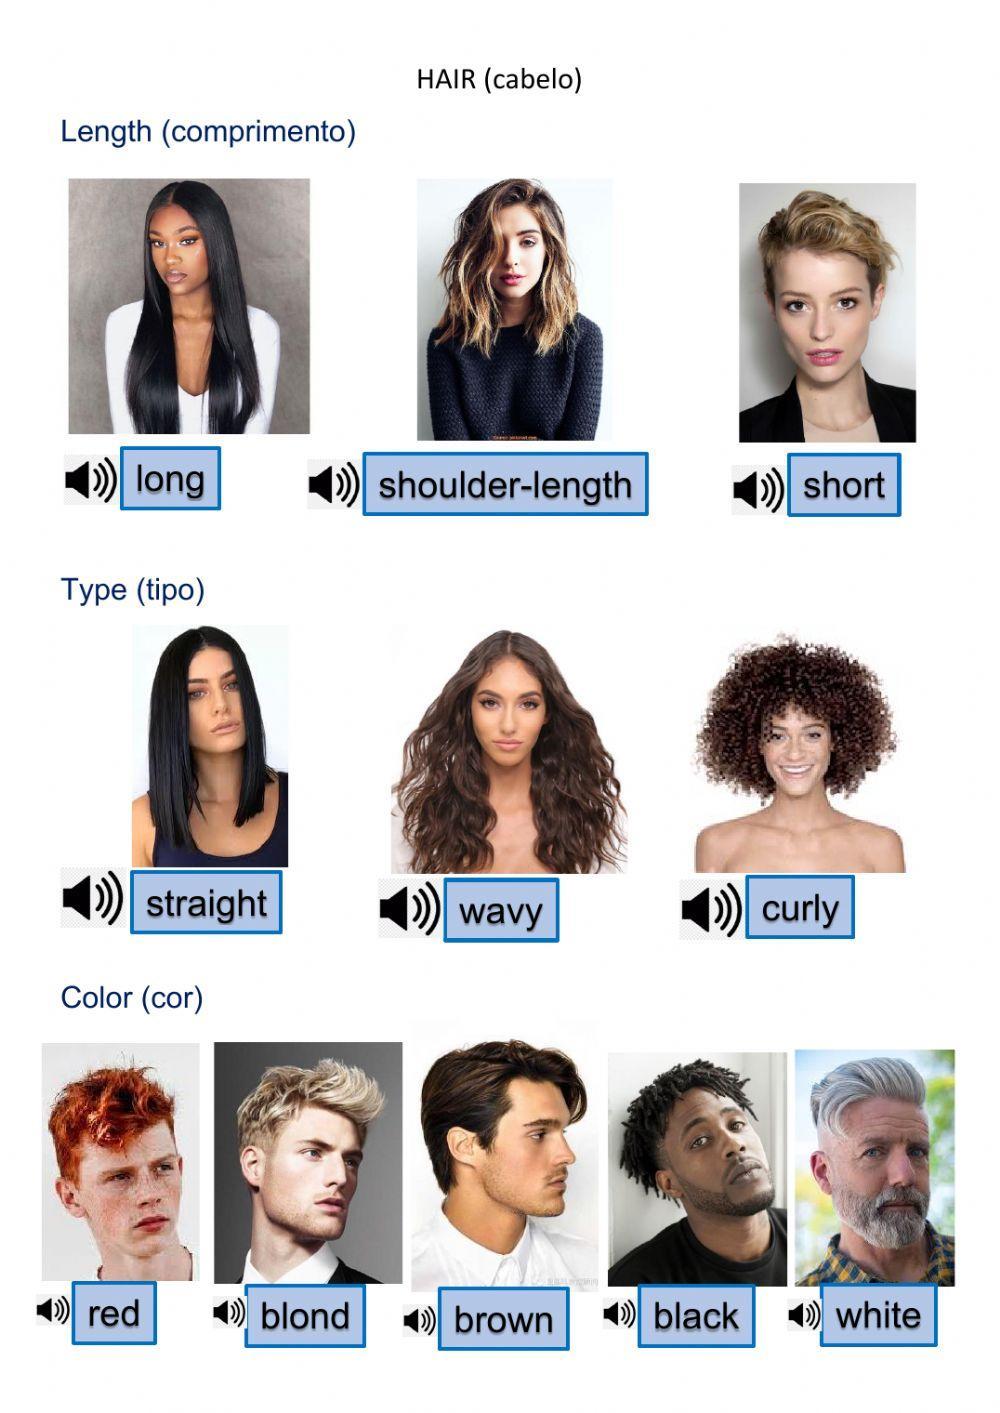 Hair description